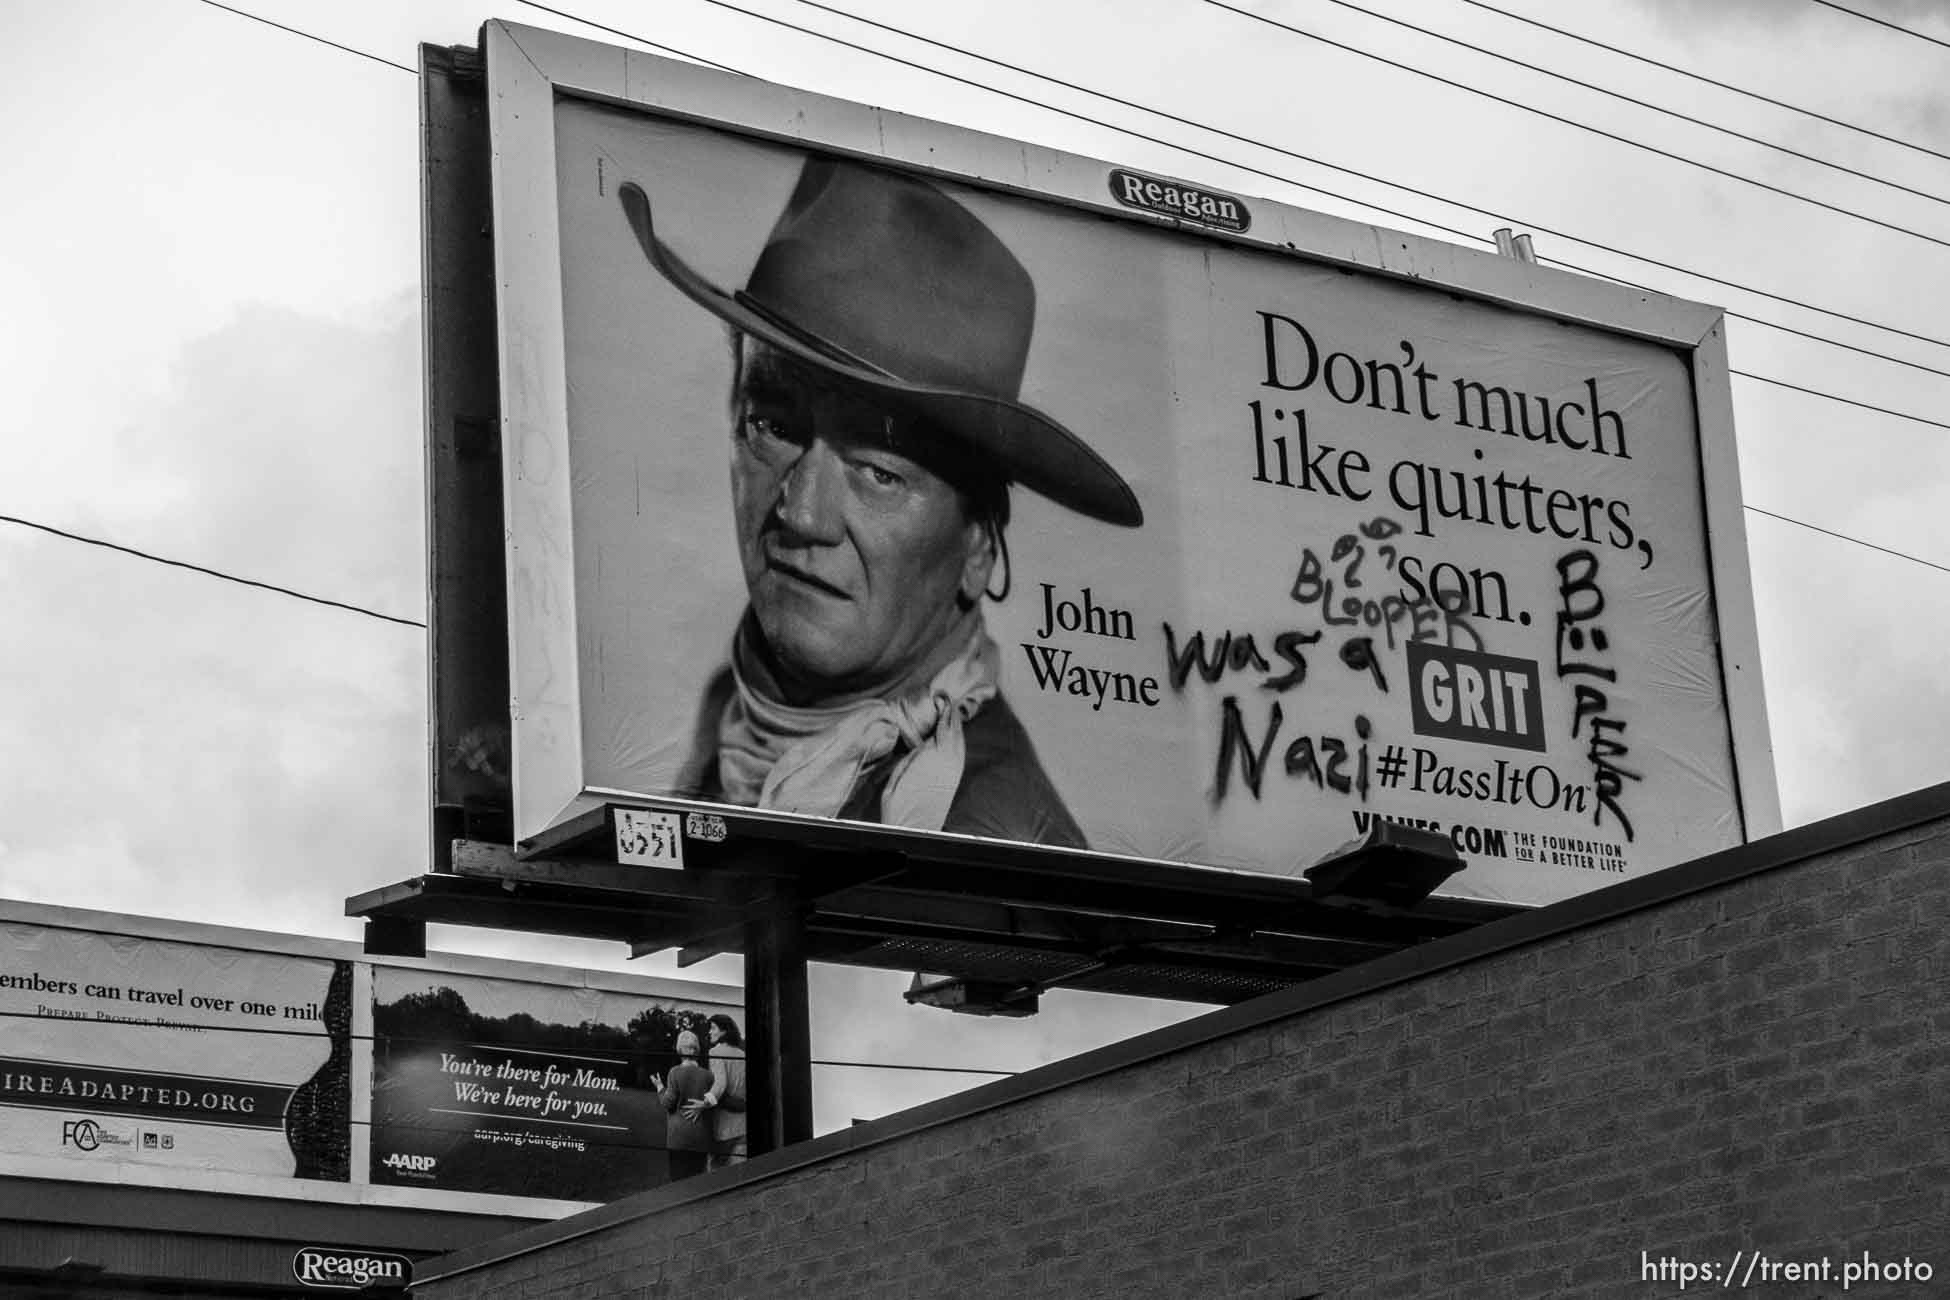 John Wayne was a Nazi